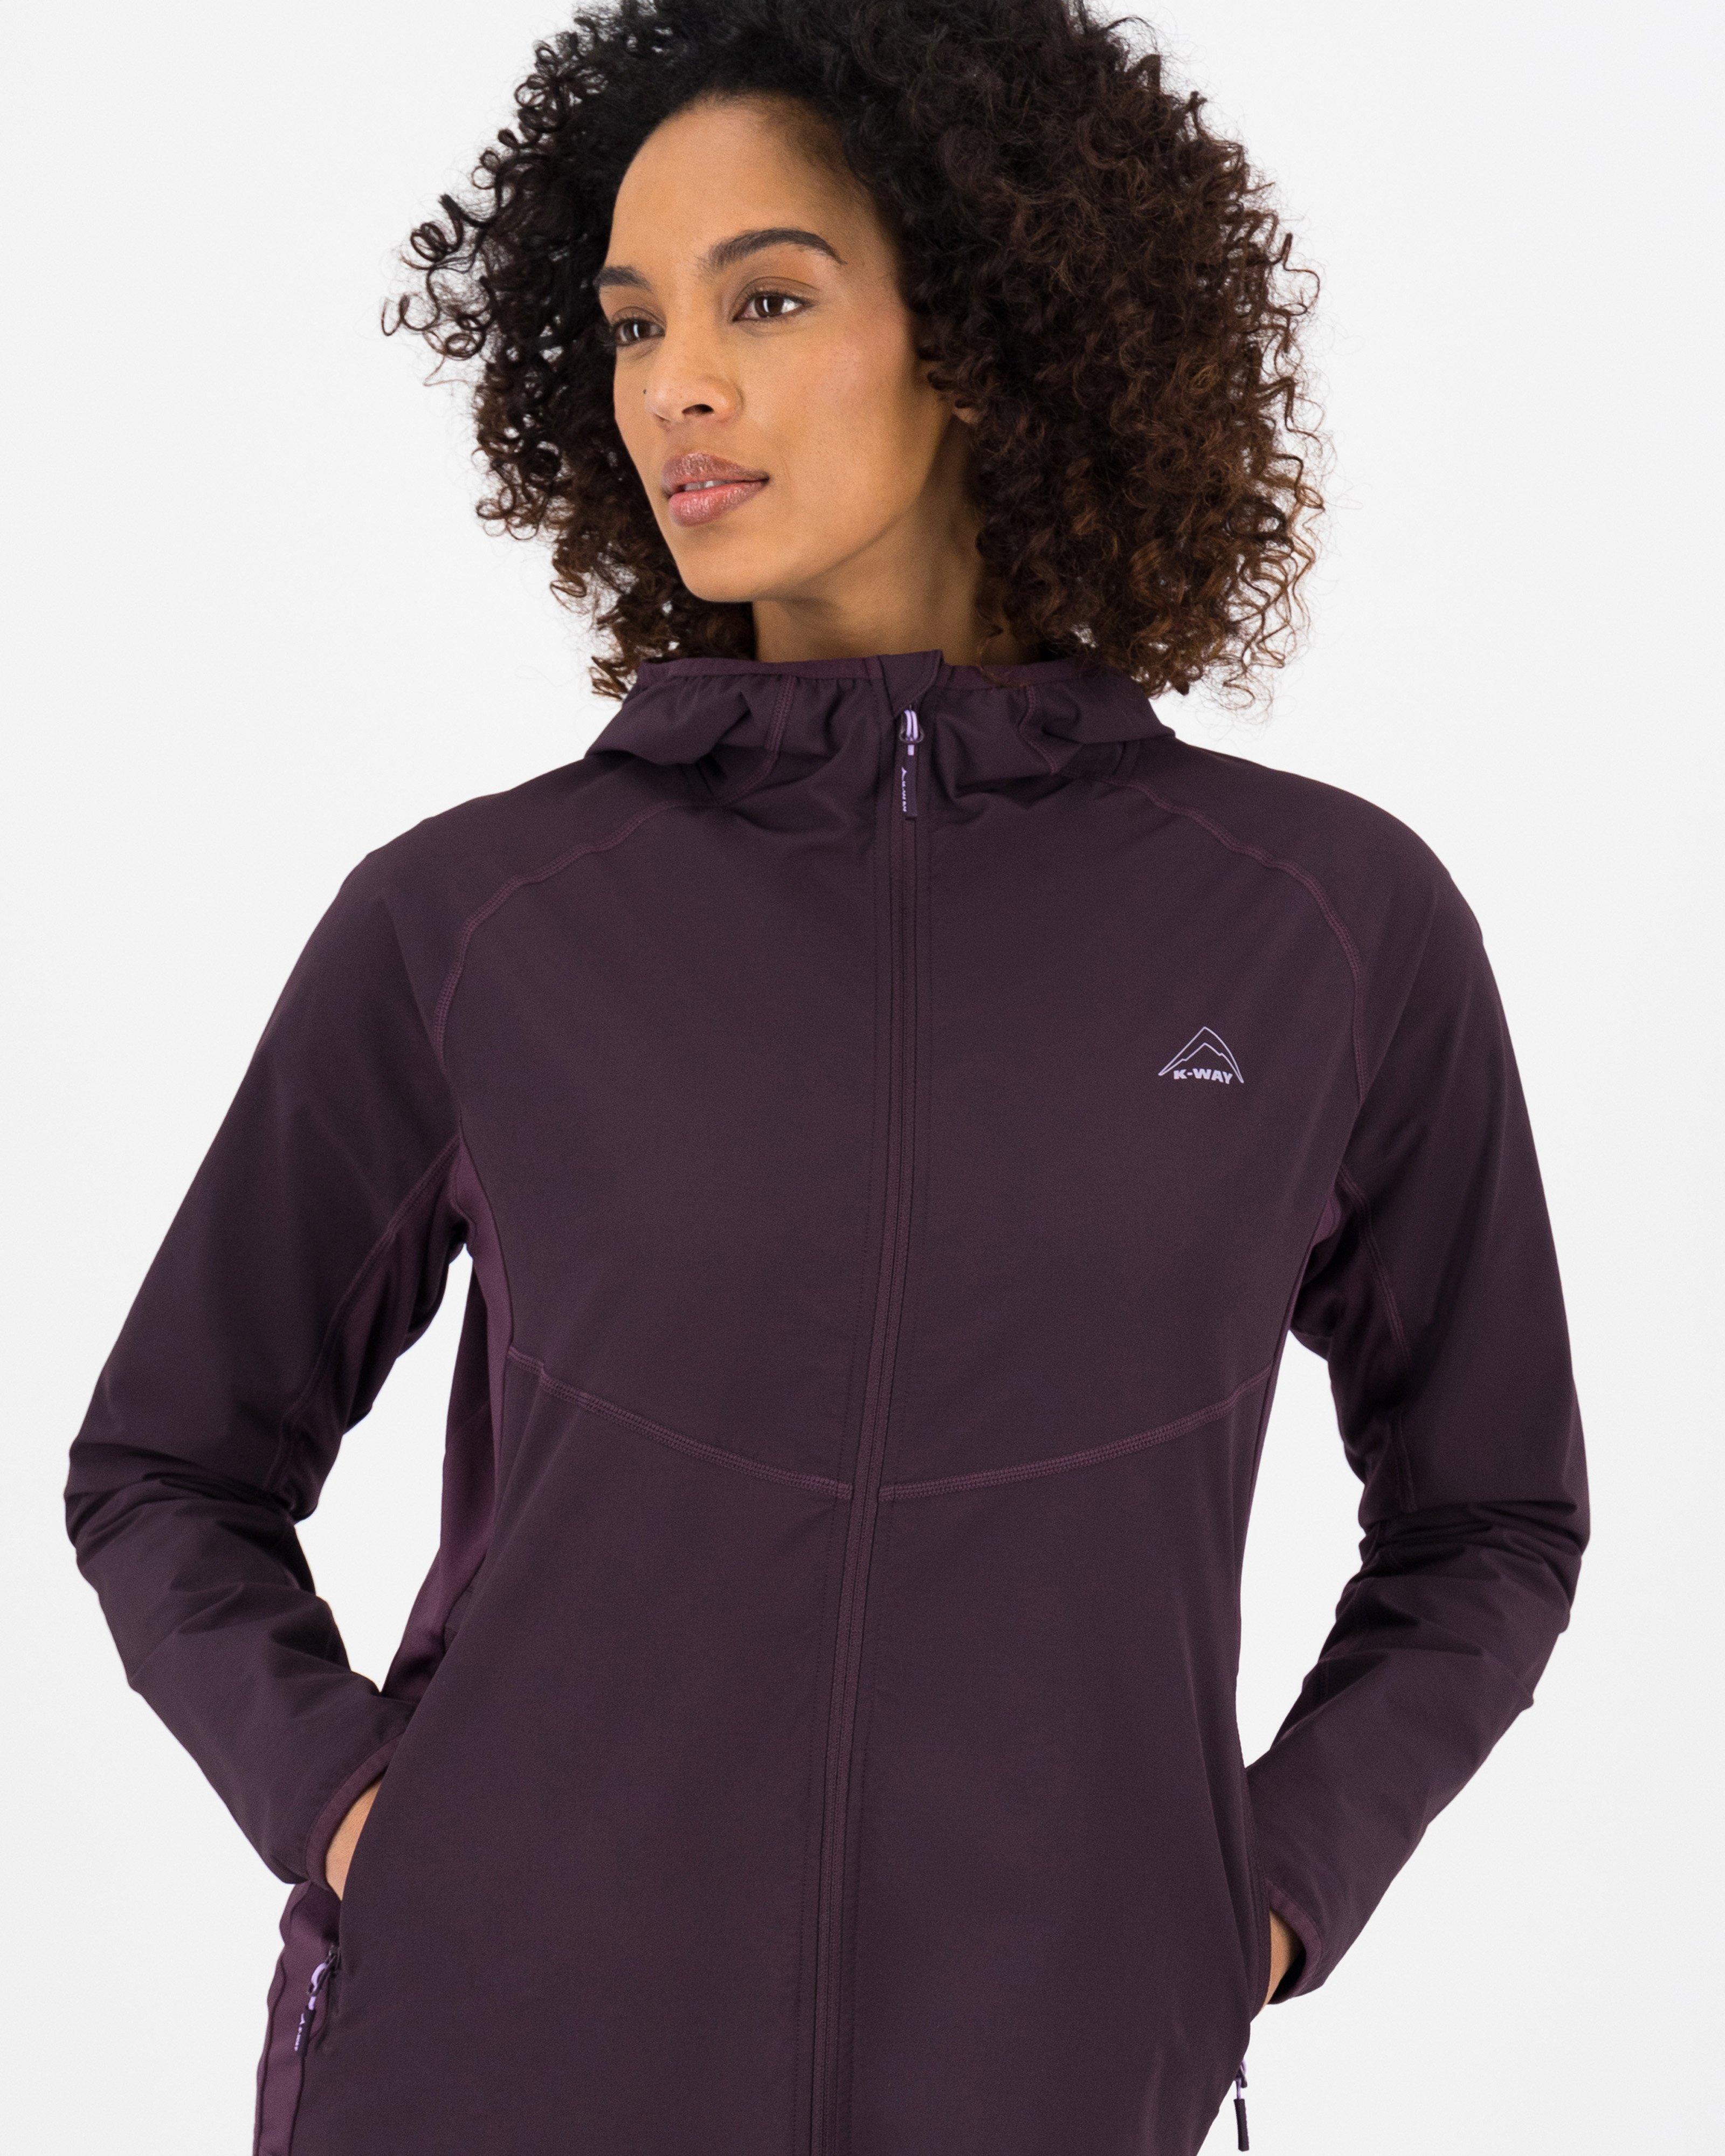 K-Way Women's Endurance Softshell Jacket -  Plum